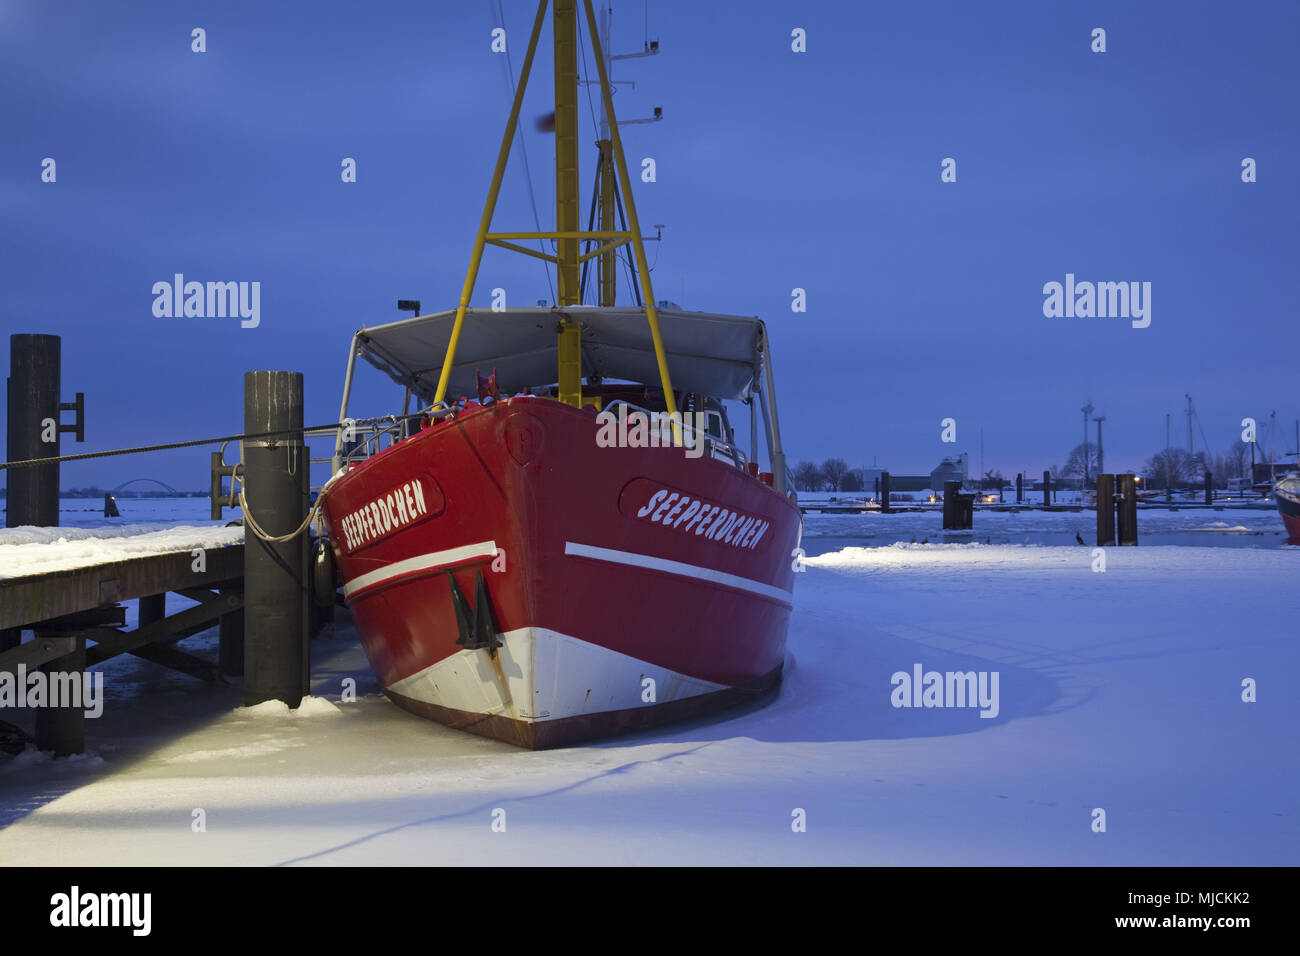 Winter in the harbour, Burgstaaken, Wulfener neck, island Fehmarn, Schleswig - Holstein, North Germany, Germany, Stock Photo